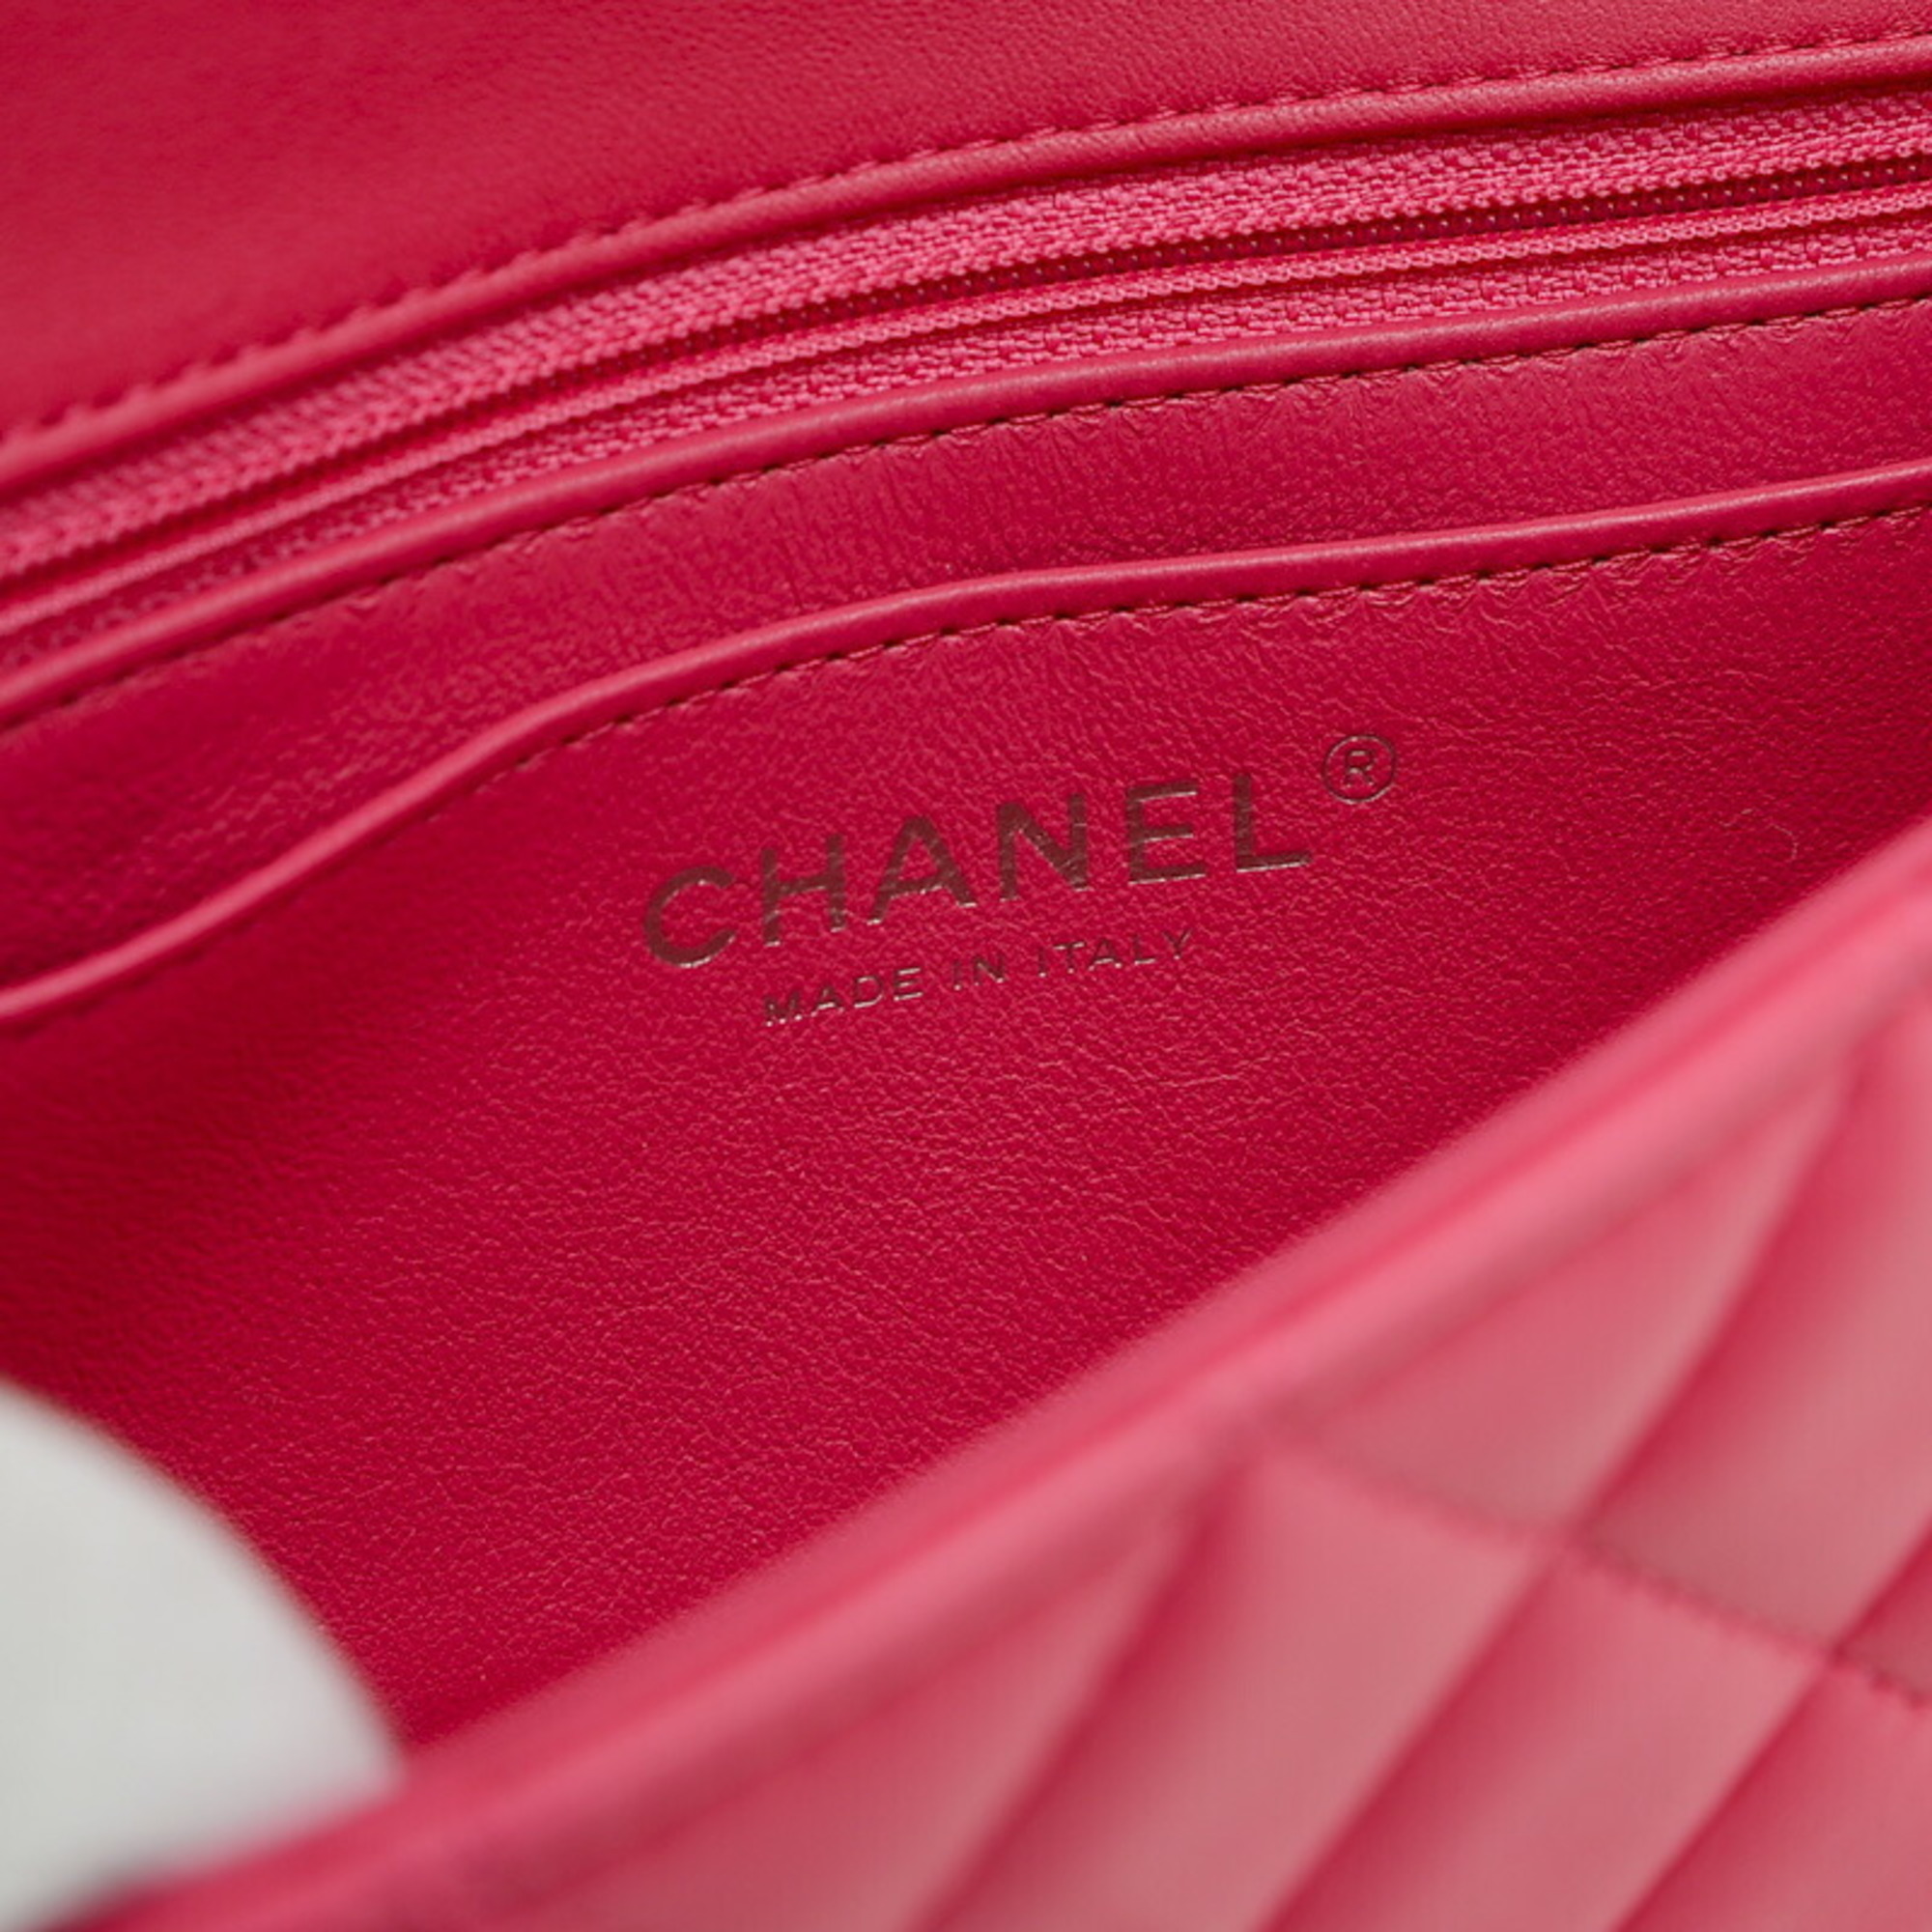 Chanel Matelasse 20 Chain Shoulder Bag Lambskin Pink A69900